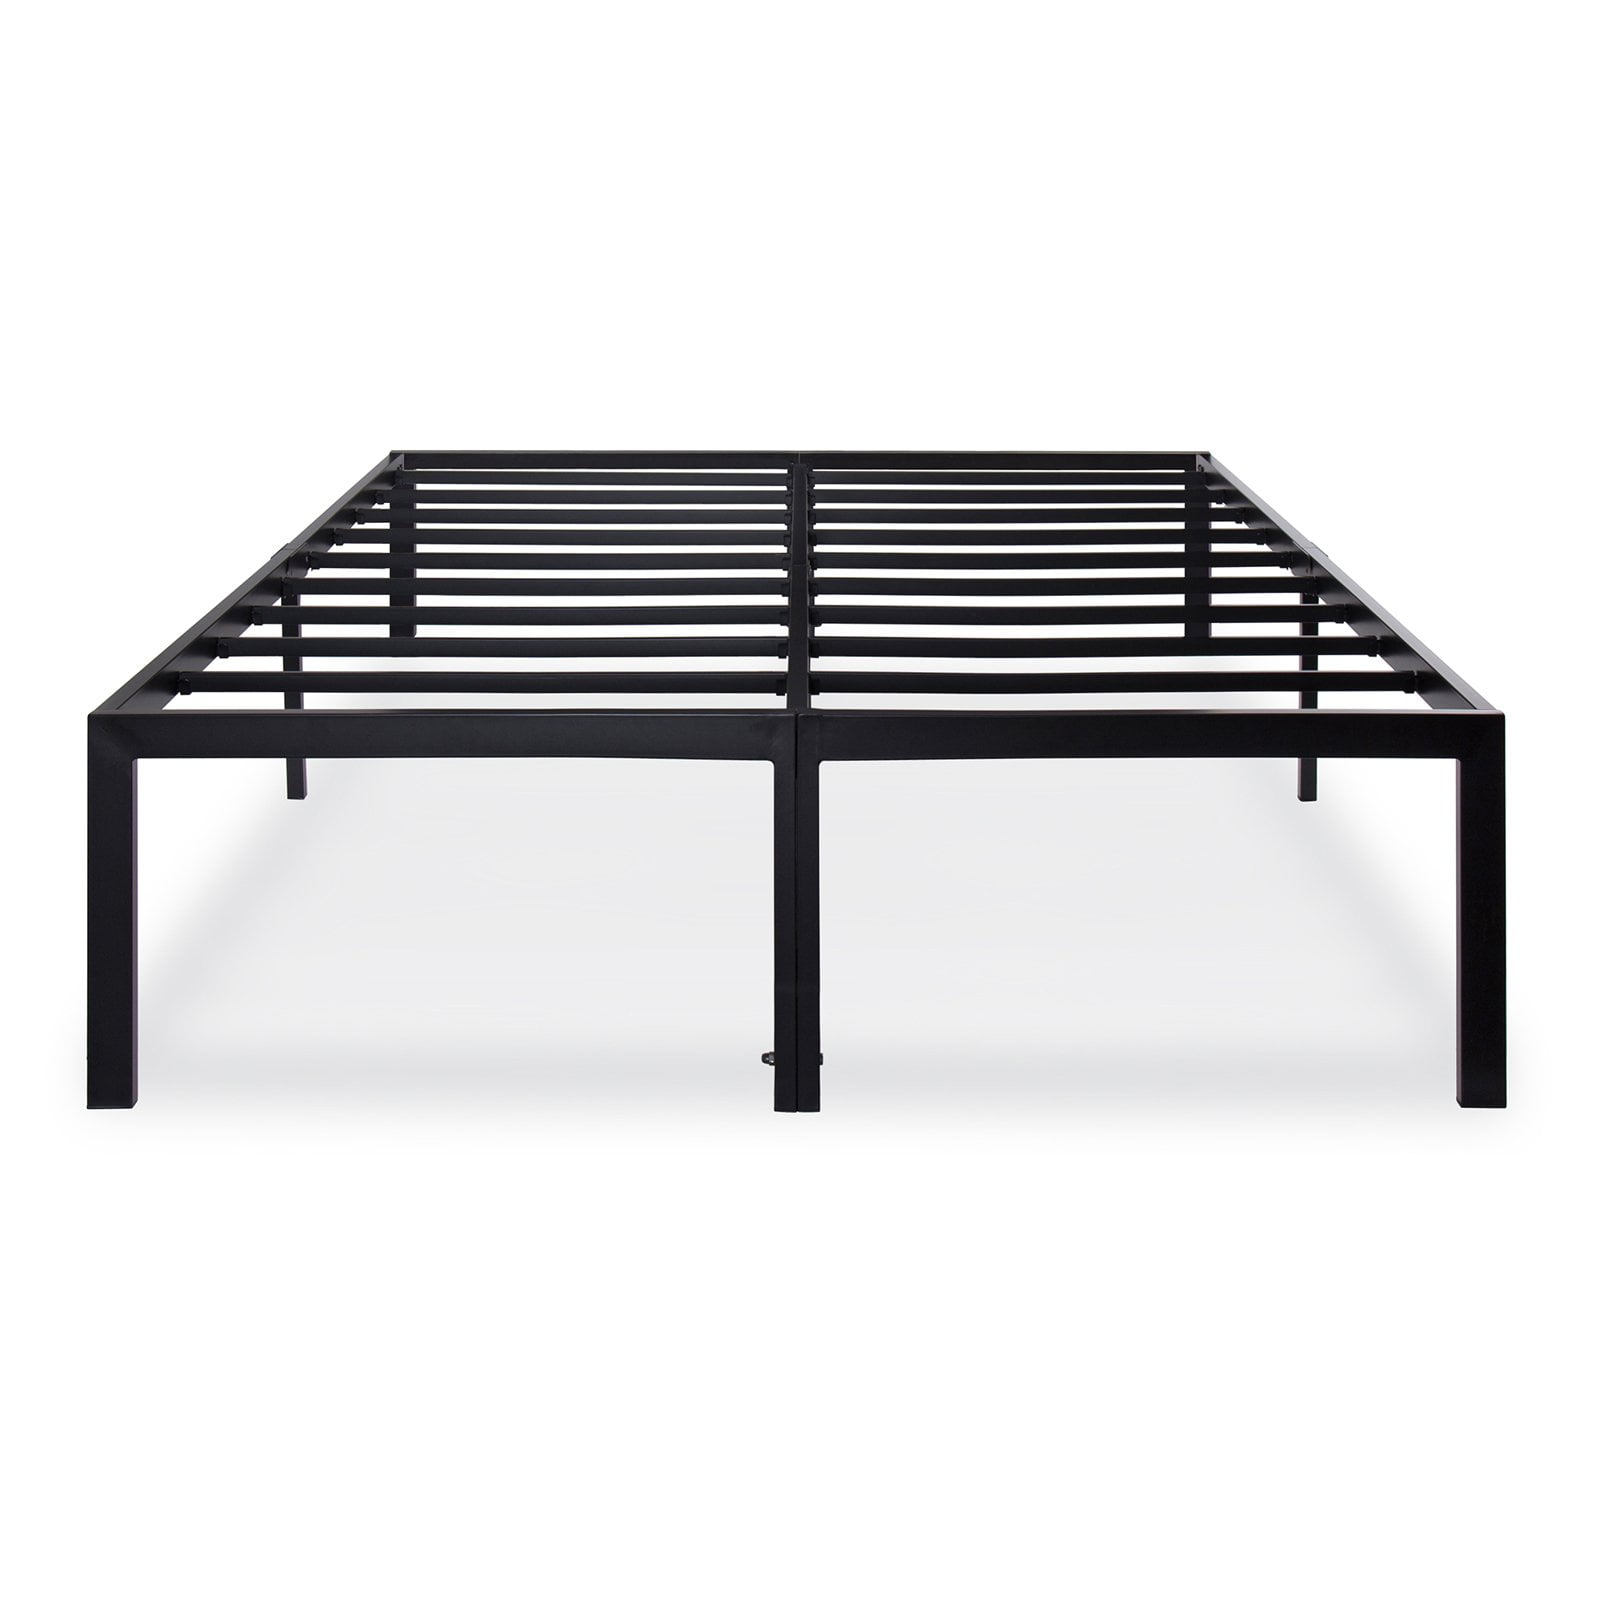 King Size Olee Sleep 77.5 x 81.5 x 14 in Steel Bed Frame Black for sale online 